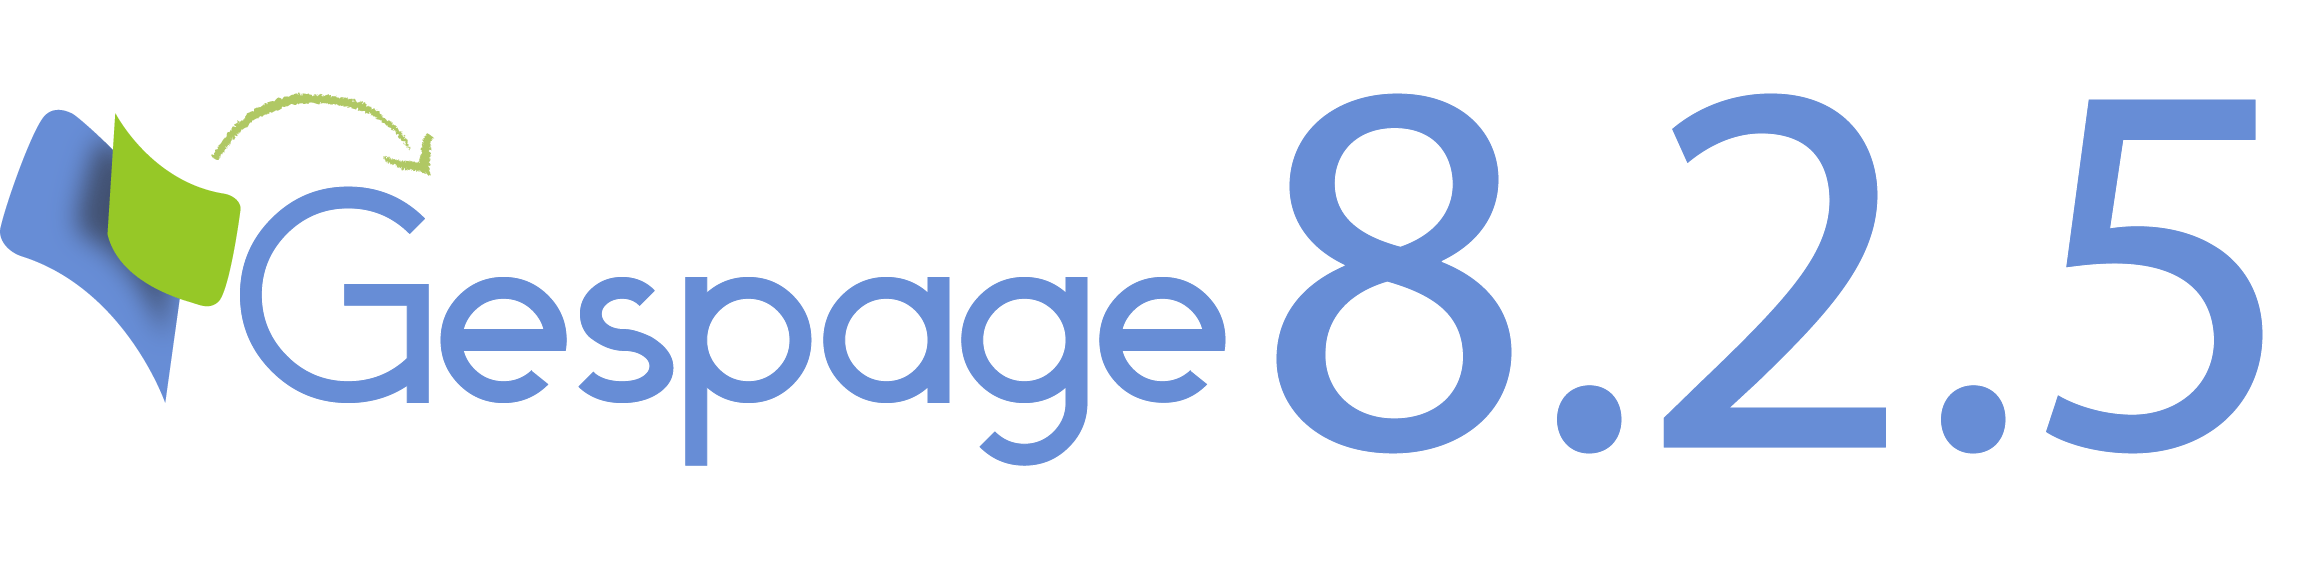 New version 8.2.5 of Gespage 2 • Gespage